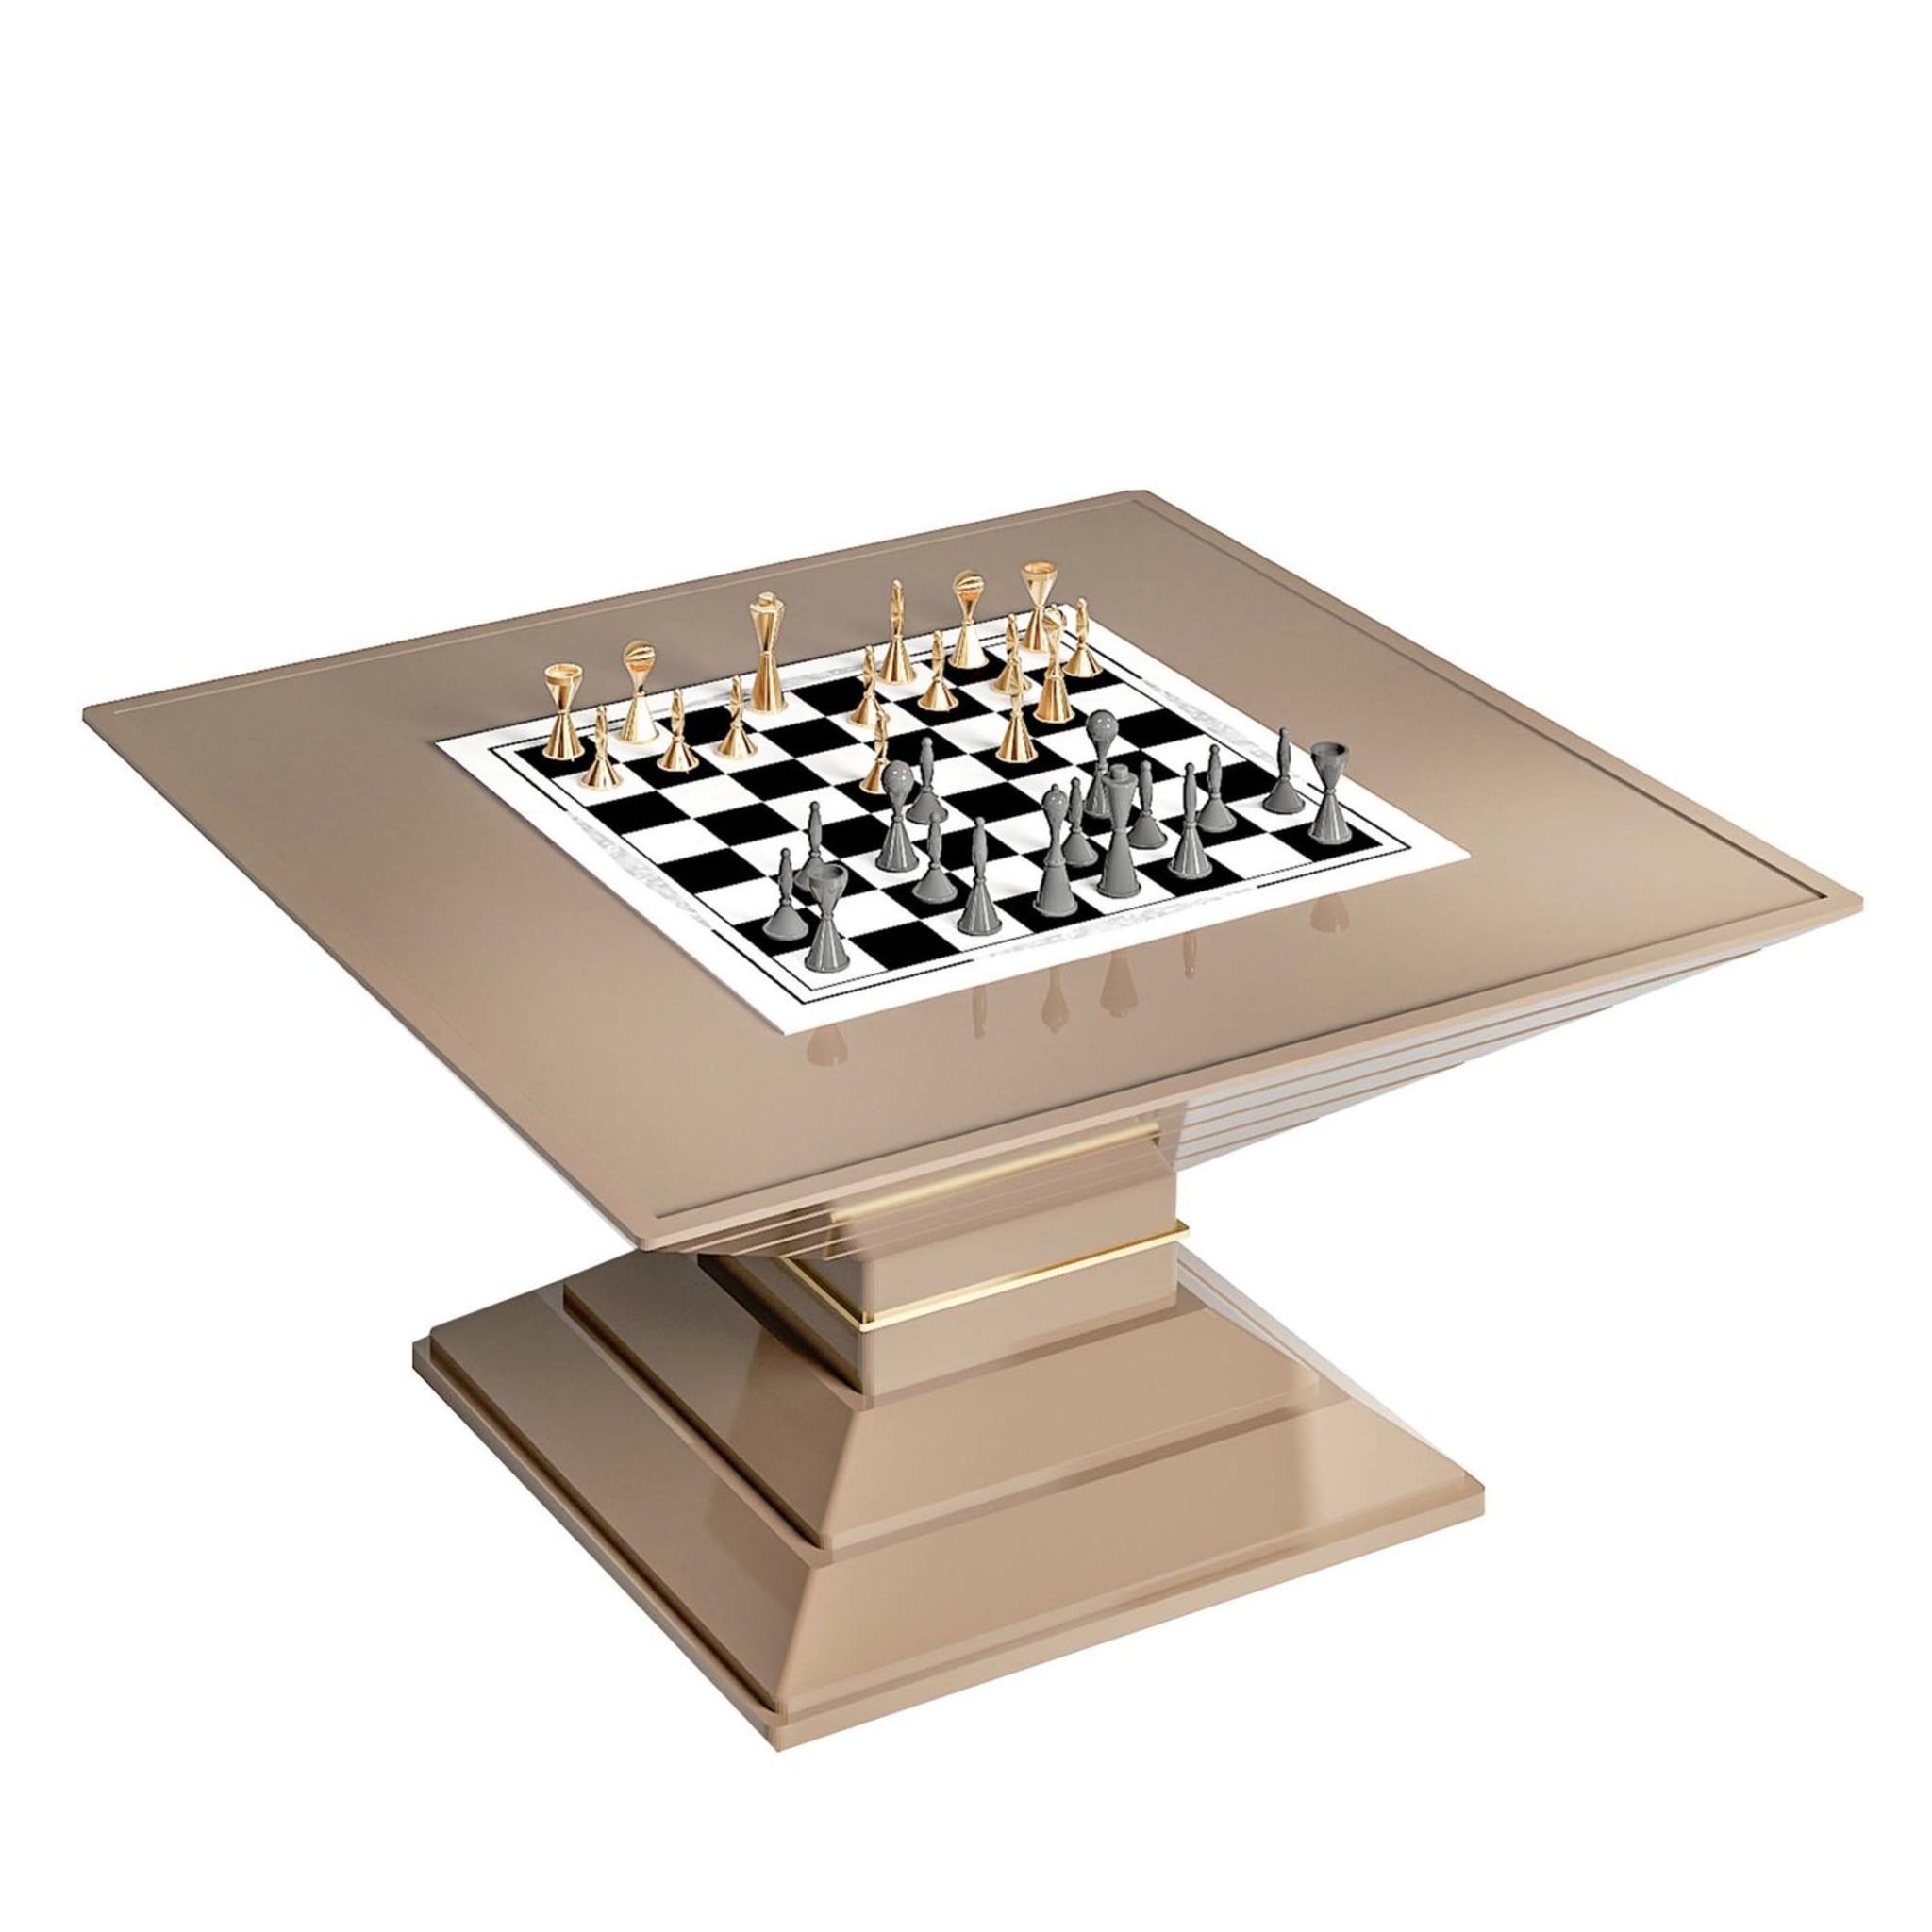 Scaccomatto beige chess table SQ by Pino Vismara - Main view